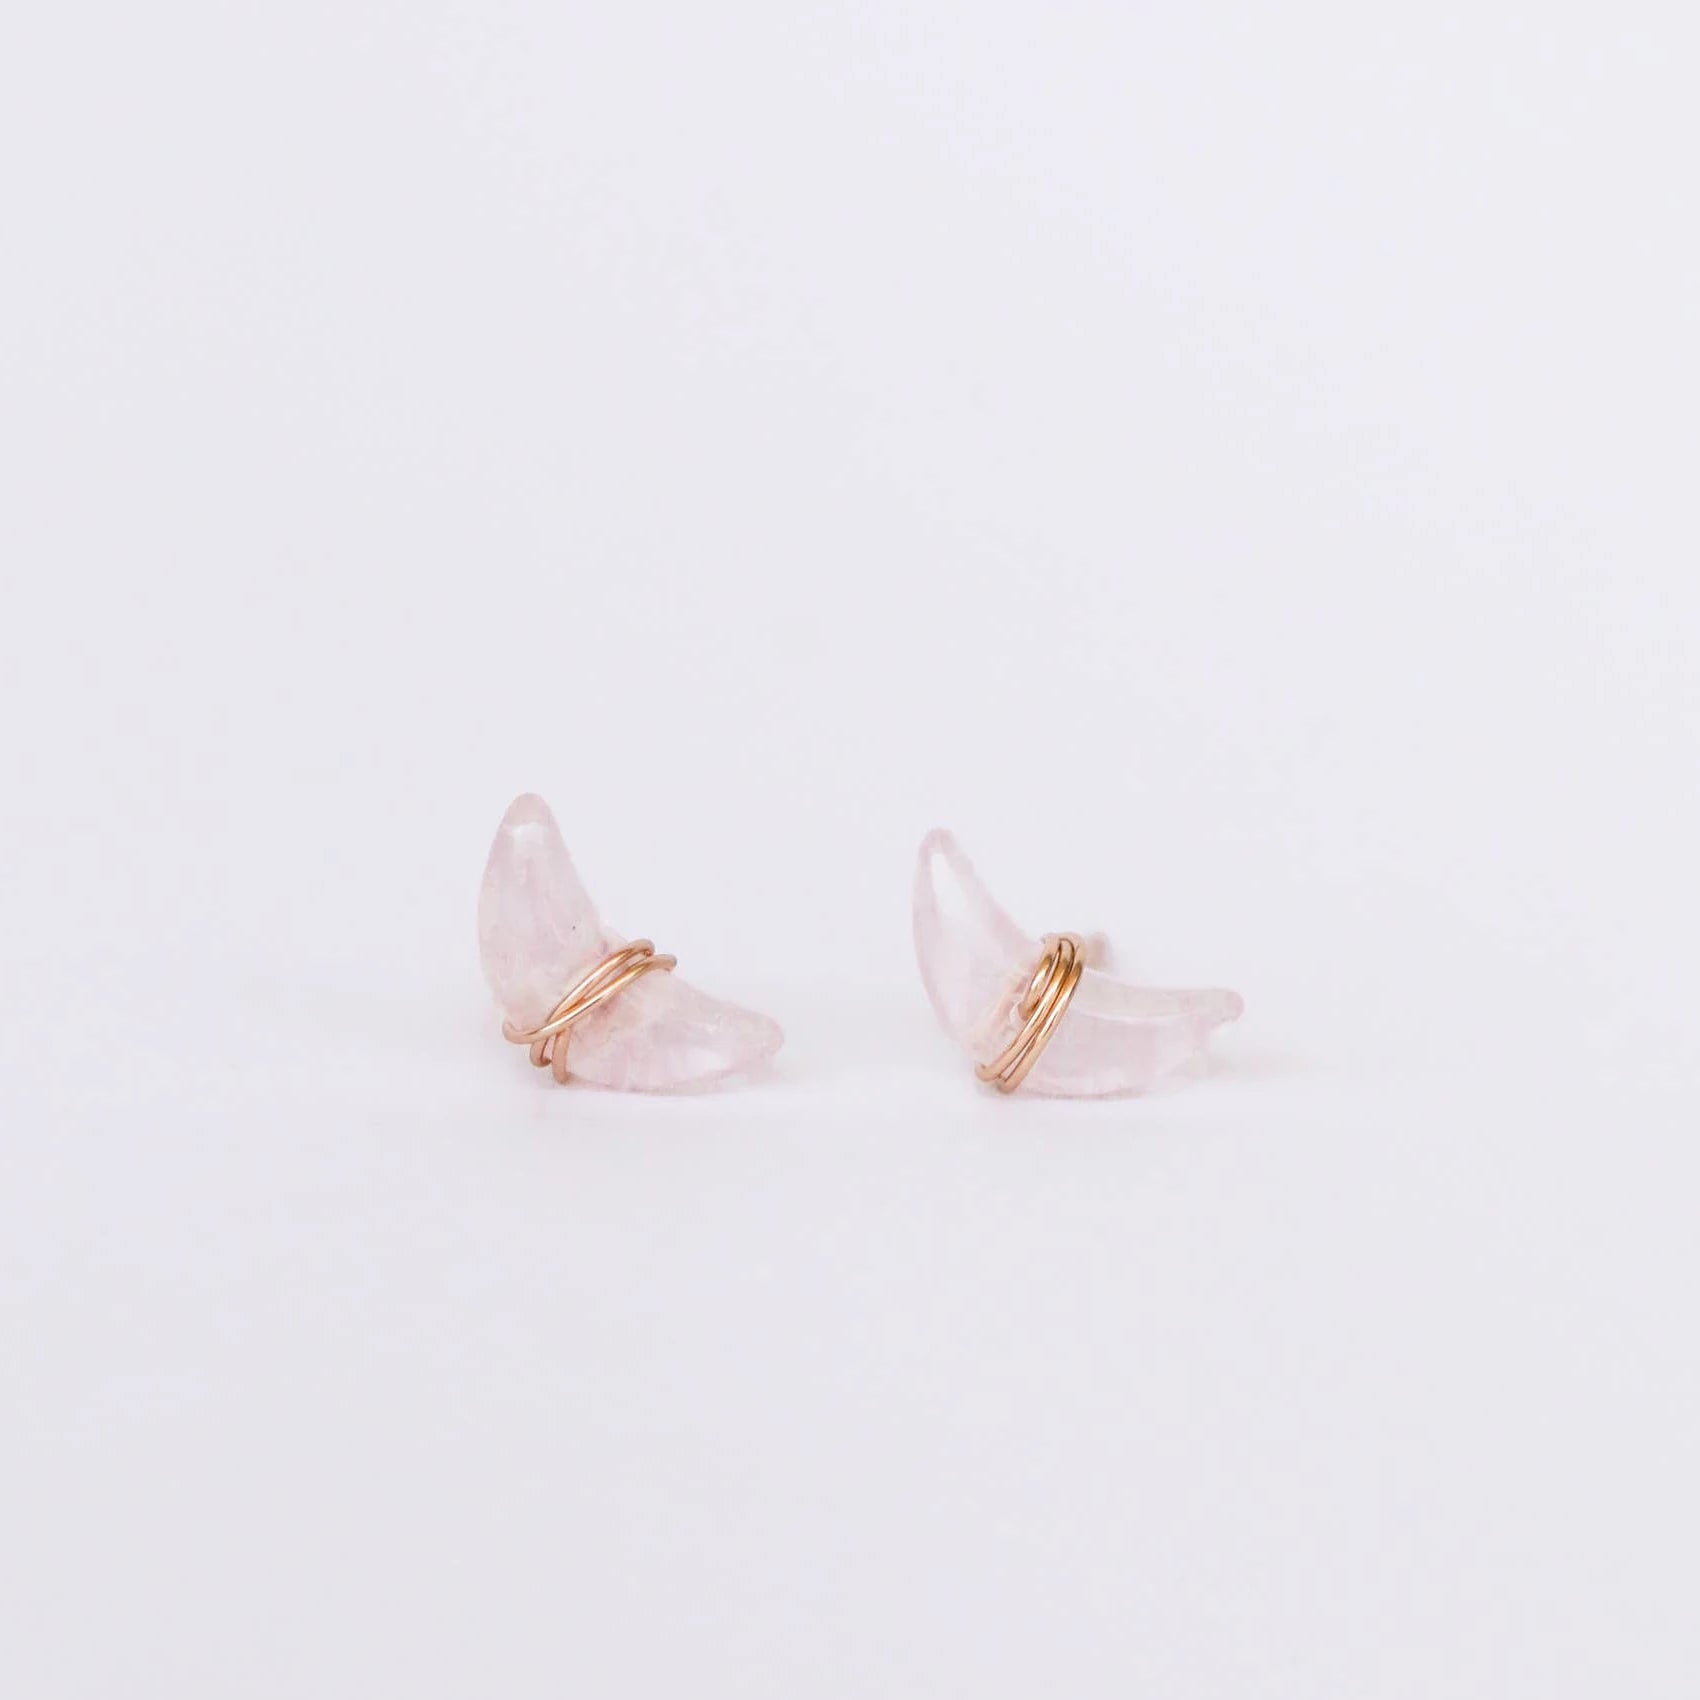 Wrapped rose quartz moon earrings.